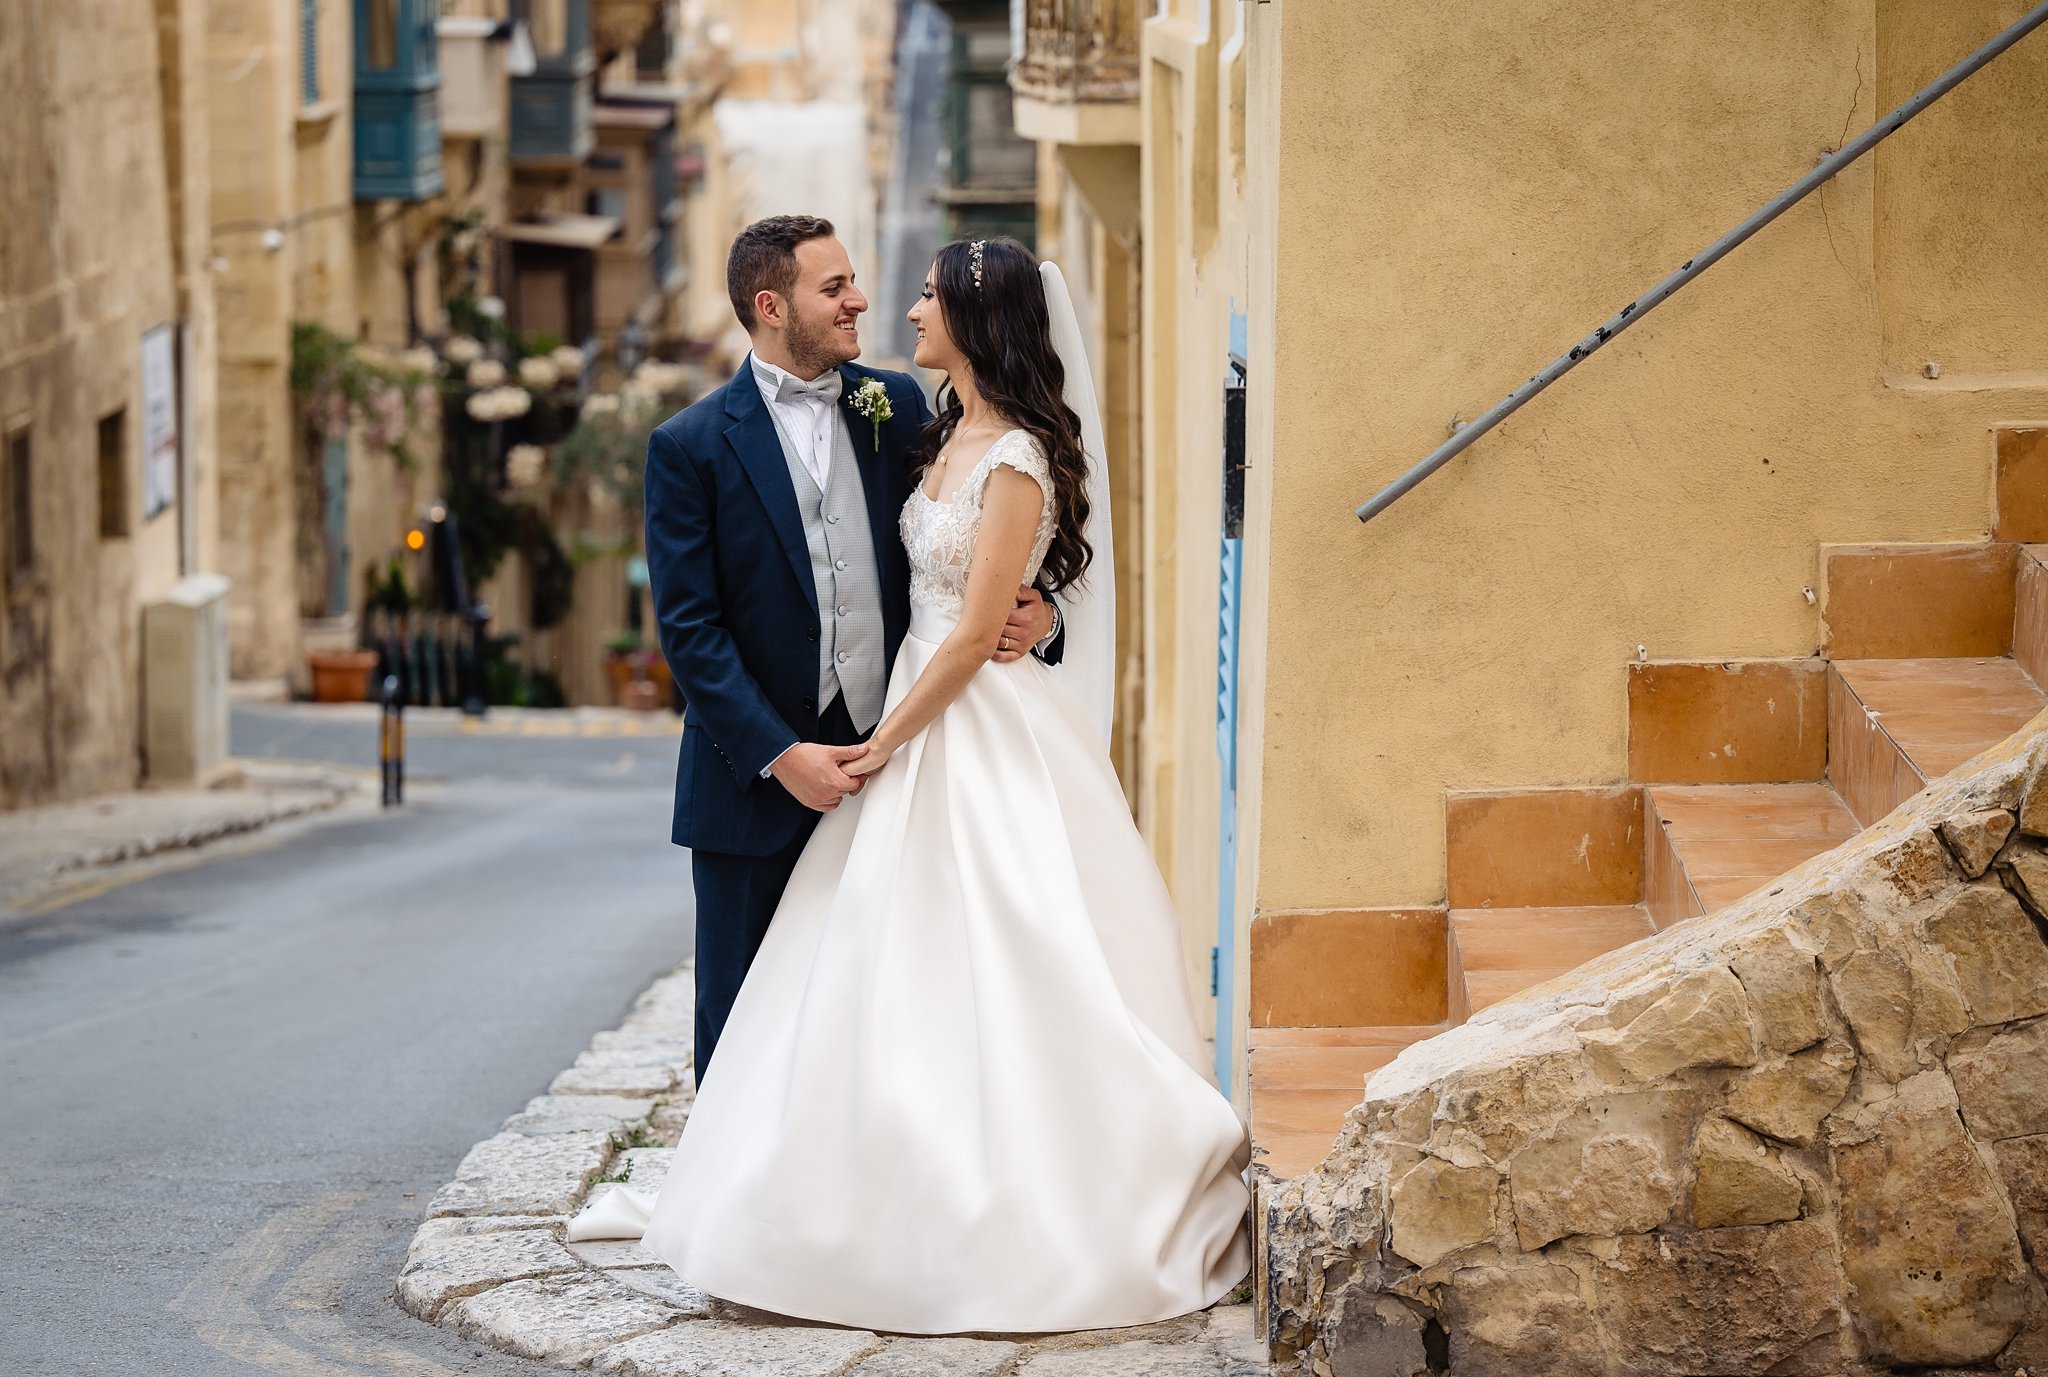 Desiree and Andrei's Wedding at Villa Mdina Naxxar_0043.jpg